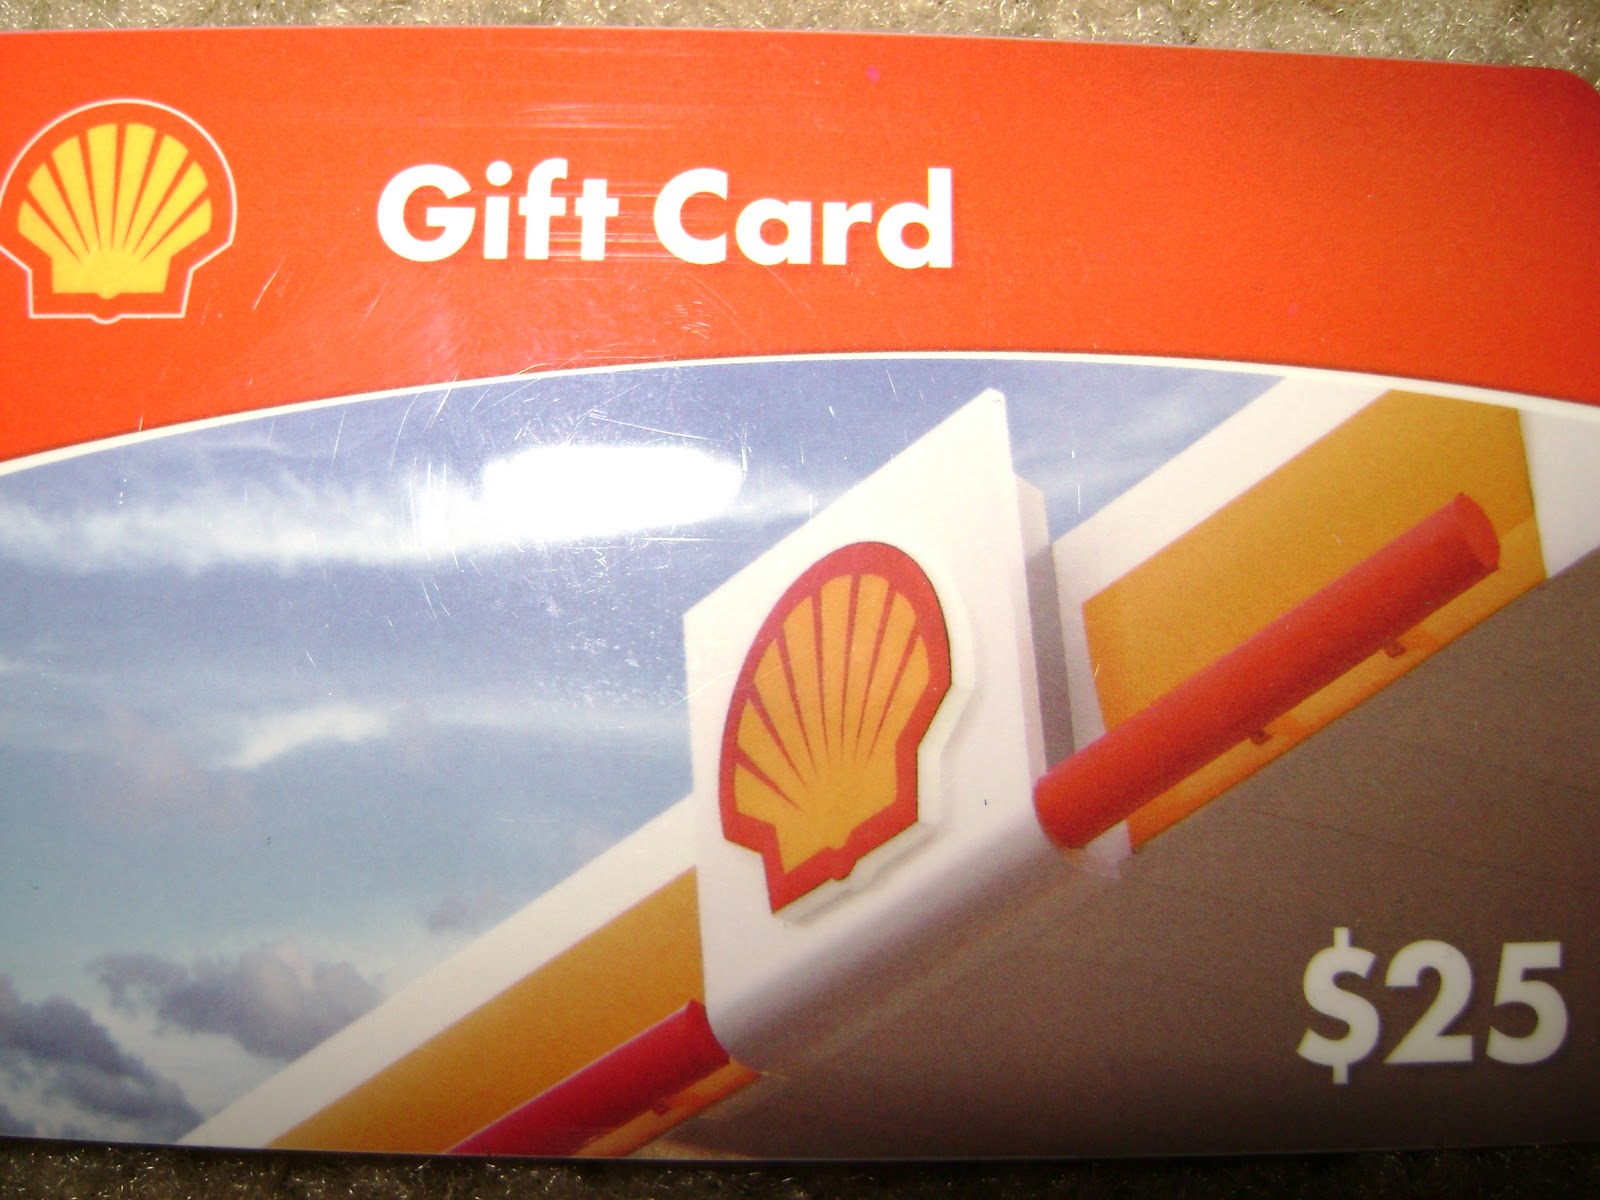 shell gas card